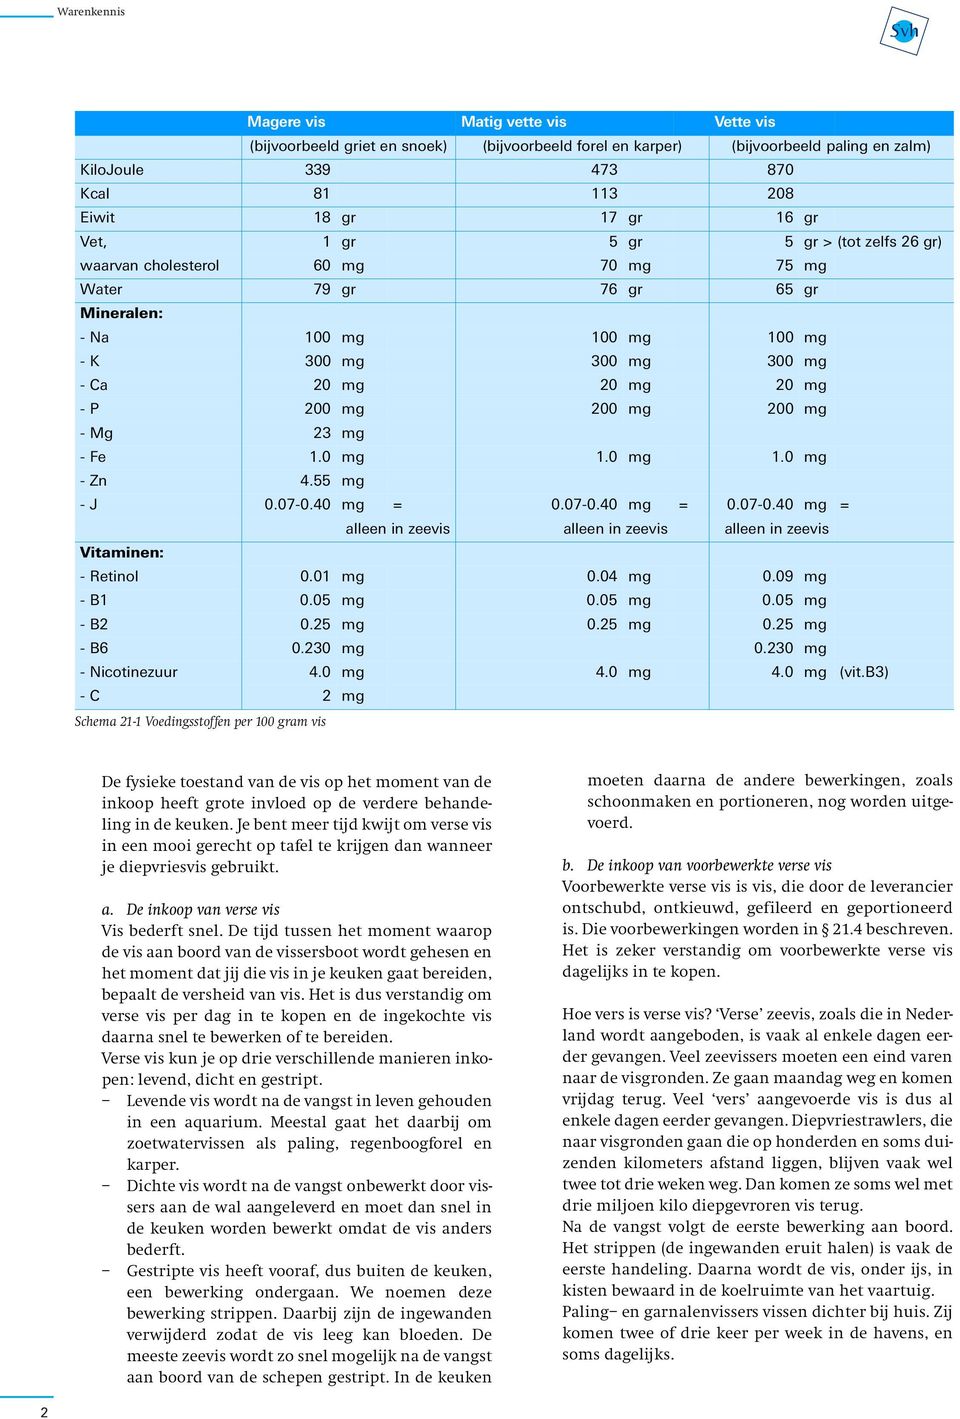 mg - Mg 23 mg - Fe 1.0 mg 1.0 mg 1.0 mg - Zn 4.55 mg - J 0.07-0.40 mg = 0.07-0.40 mg = 0.07-0.40 mg = alleen in zeevis alleen in zeevis alleen in zeevis Vitaminen: - Retinol 0.01 mg 0.04 mg 0.